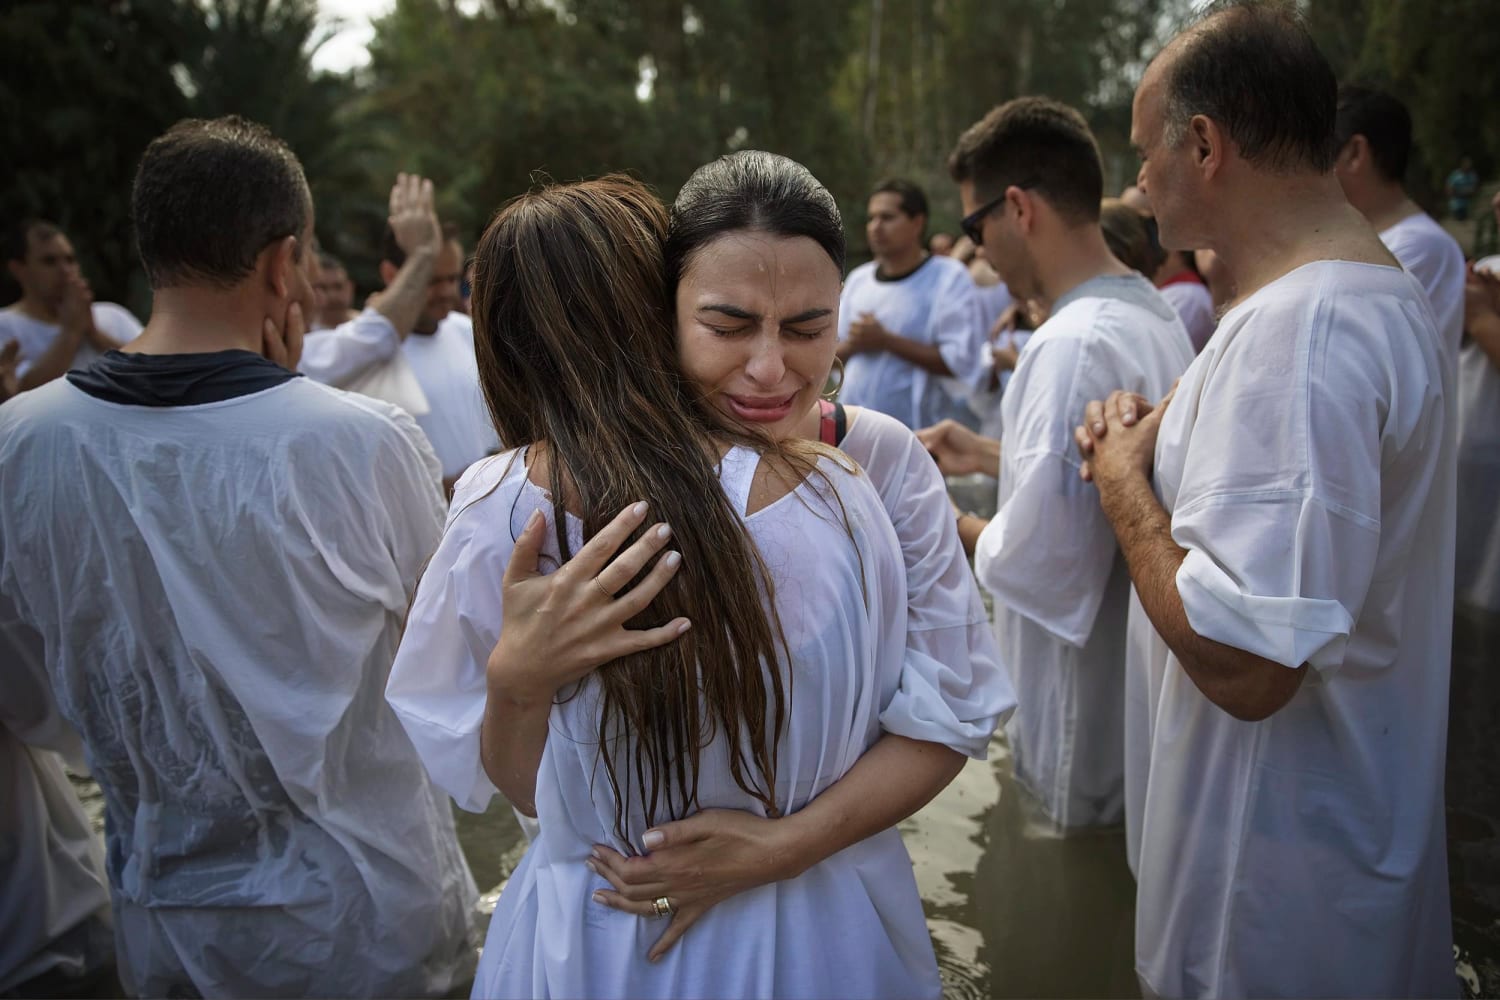 christian baptism ceremony